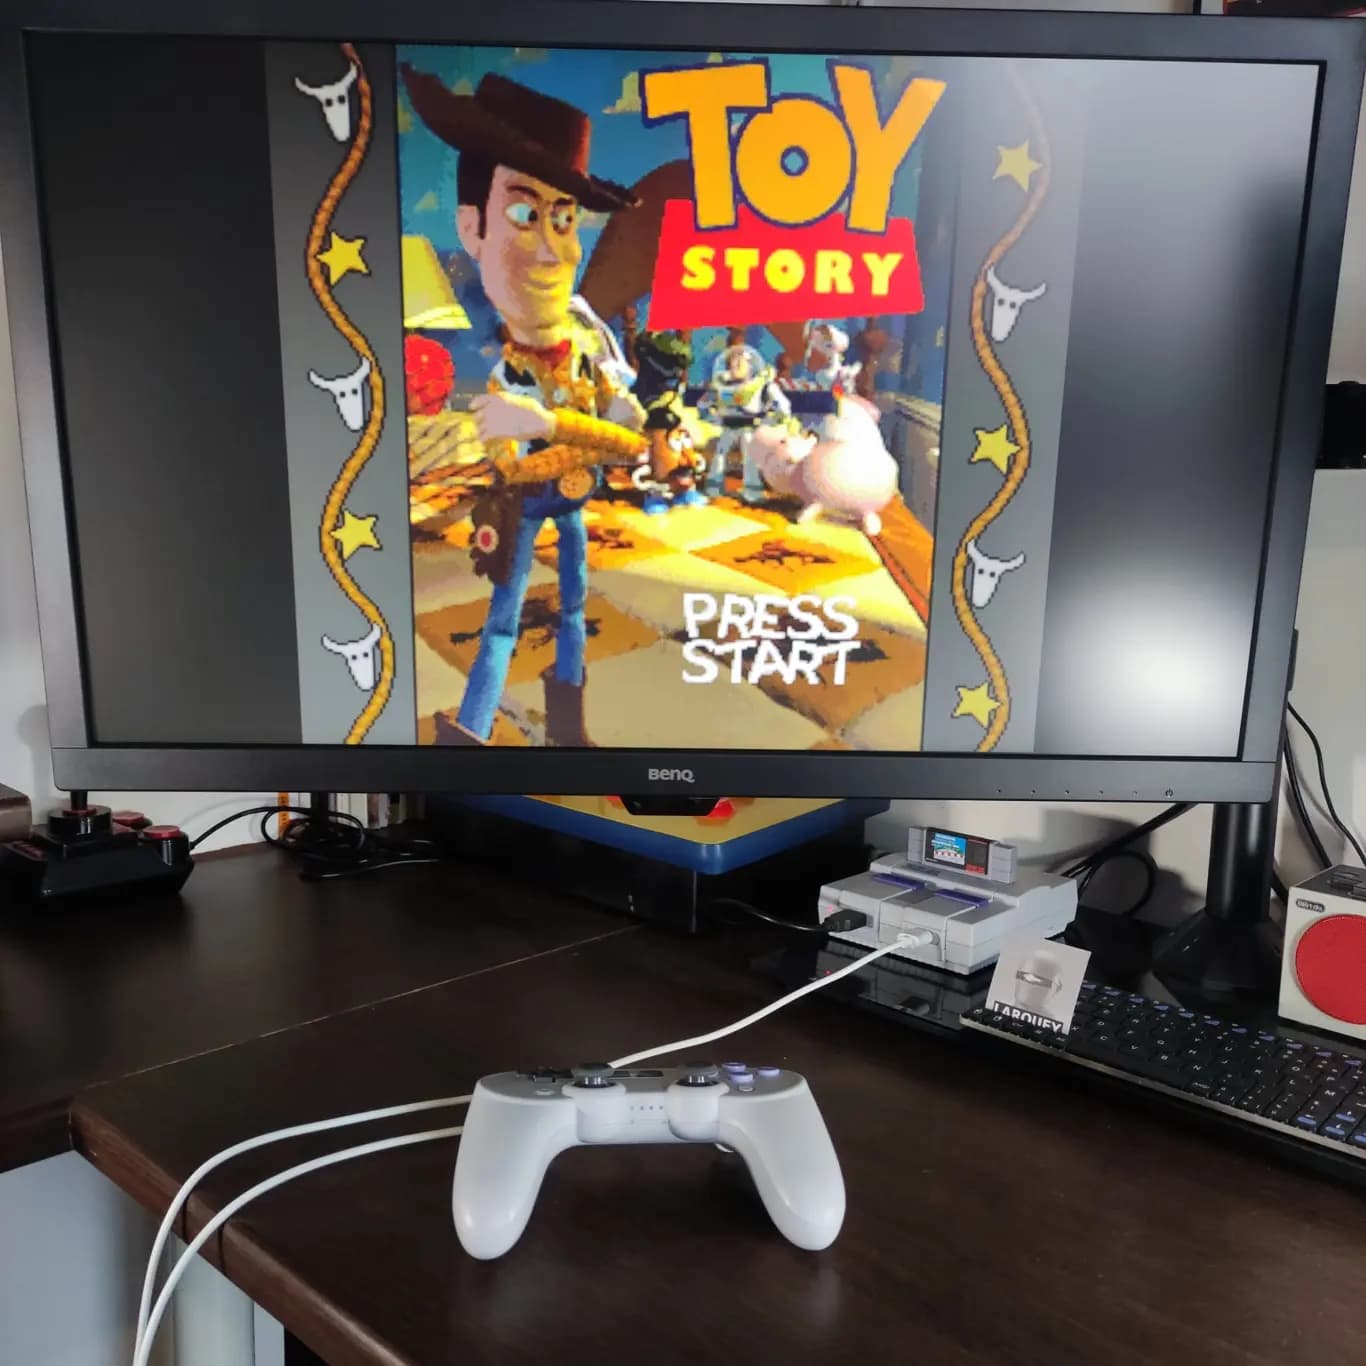 Larquey: Toy Story [Total Stars/Marshal] (Sega Genesis / MegaDrive Emulated) 101 points on 2022-09-15 06:54:55